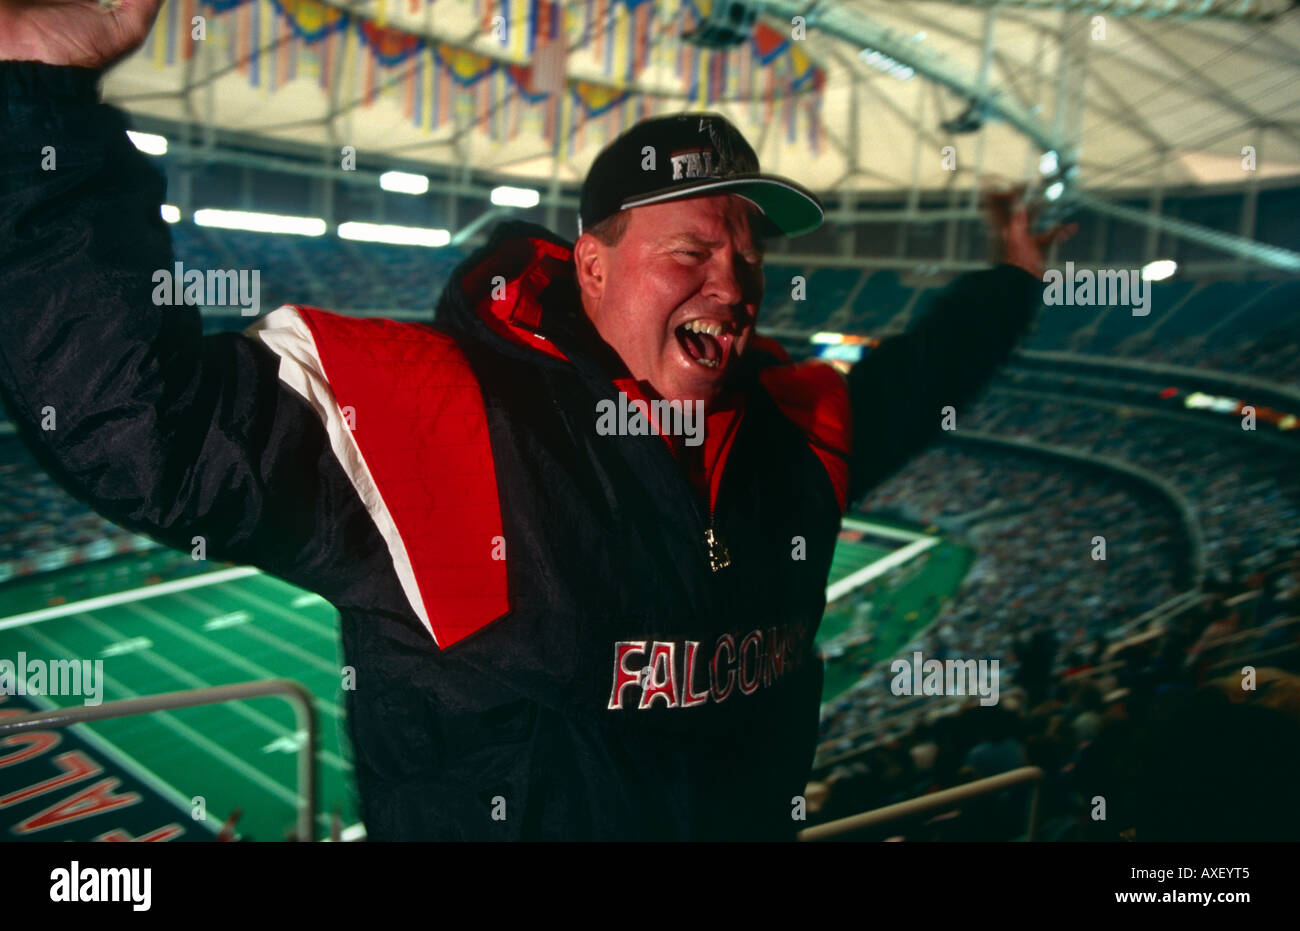 A sports fan celebrates a victory for the Atlanta Falcons during a football game at the Georgia Dome, Atlanta USA Stock Photo